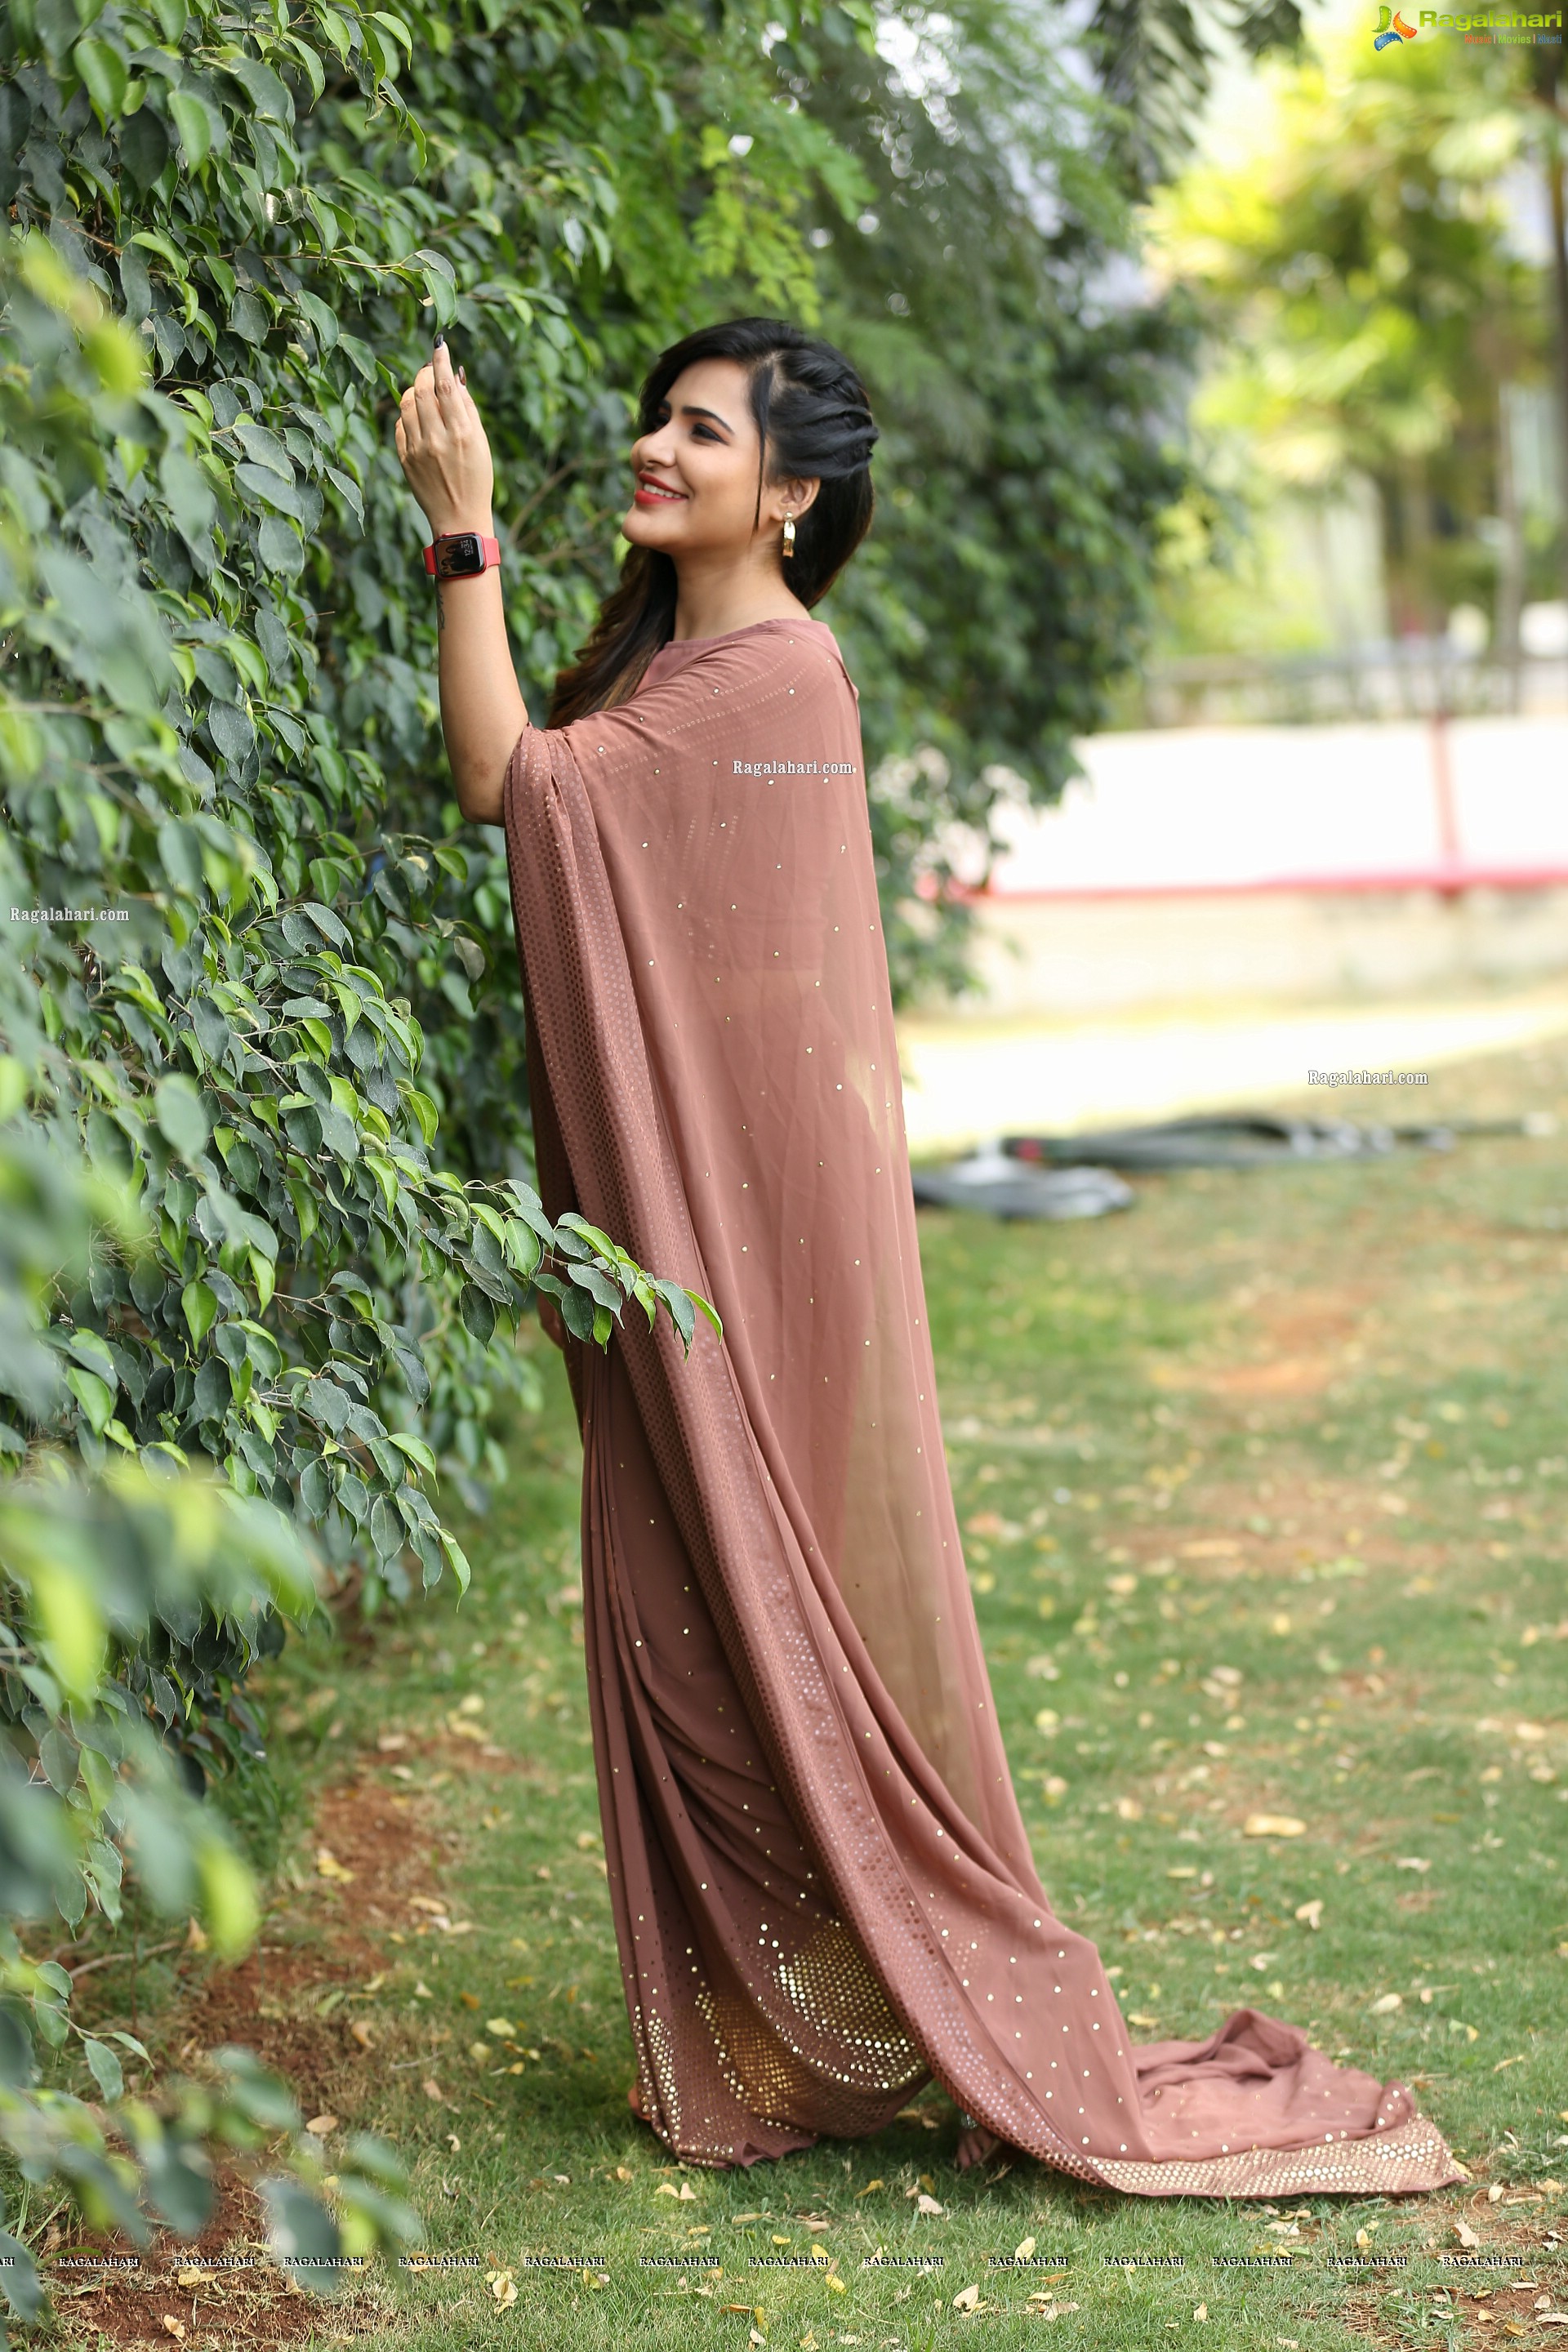 Ashu Reddy in Alluring Light Brown Saree, HD Photo Gallery